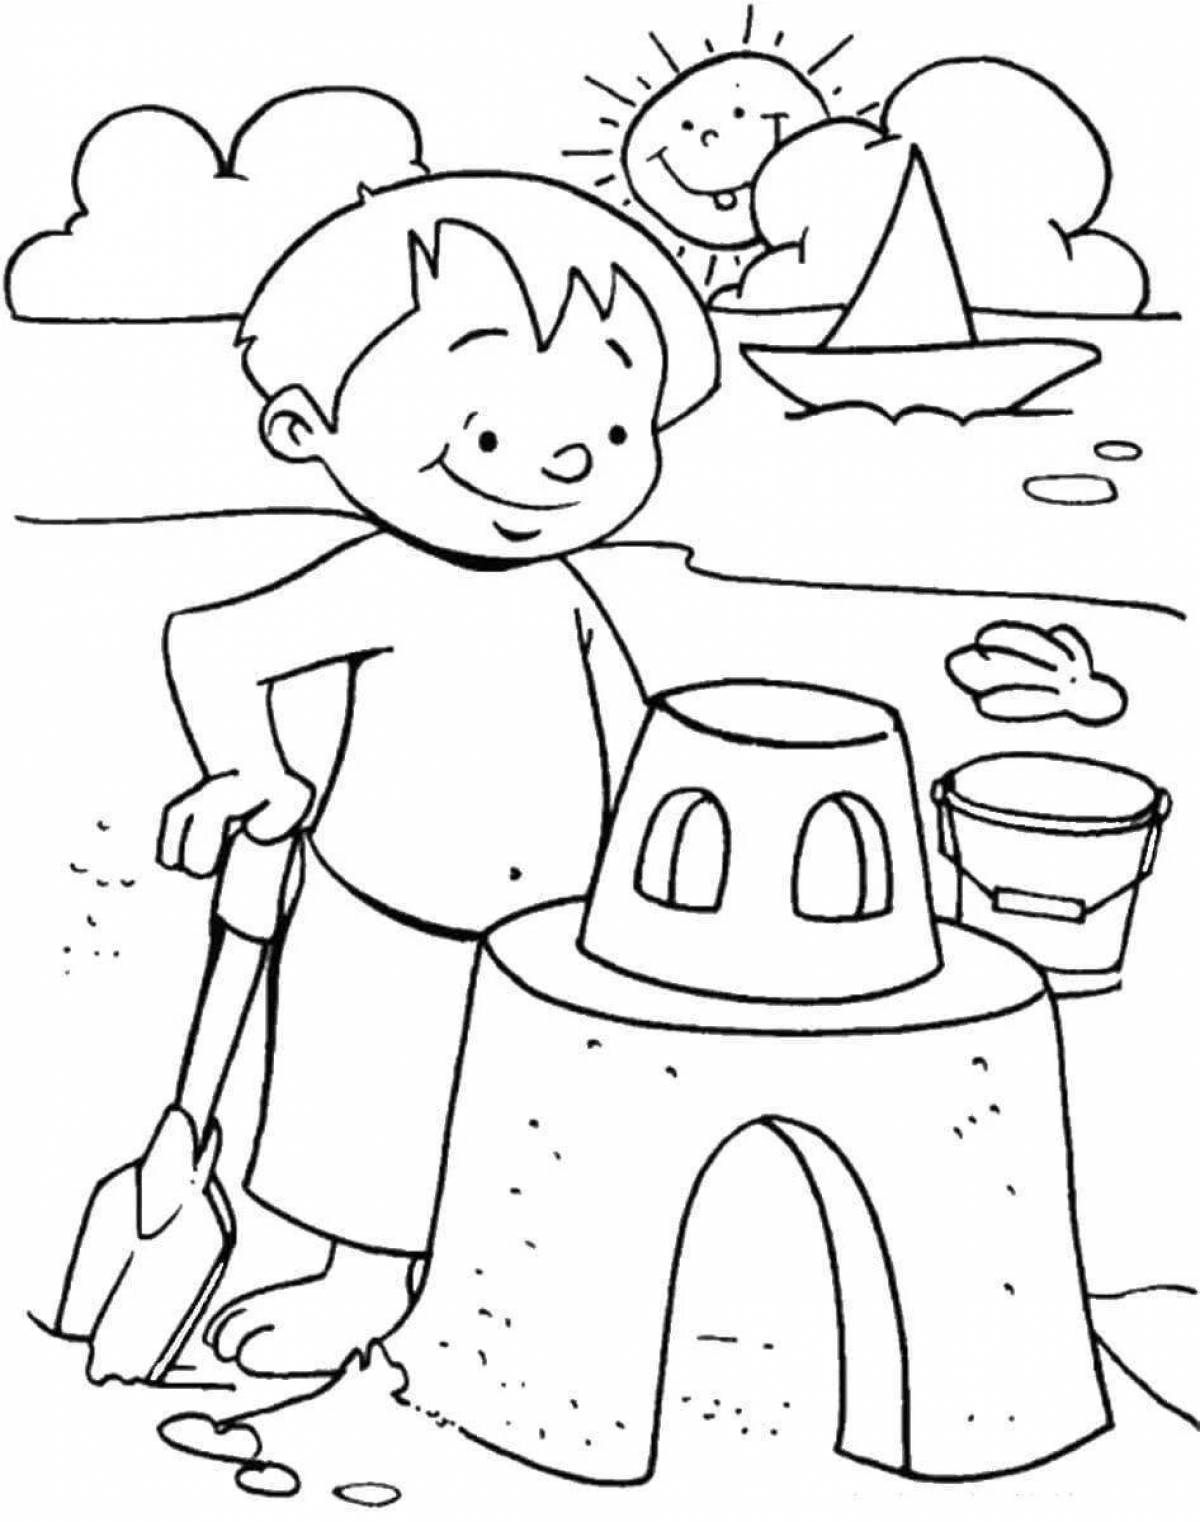 A fun sandbox coloring book for kids